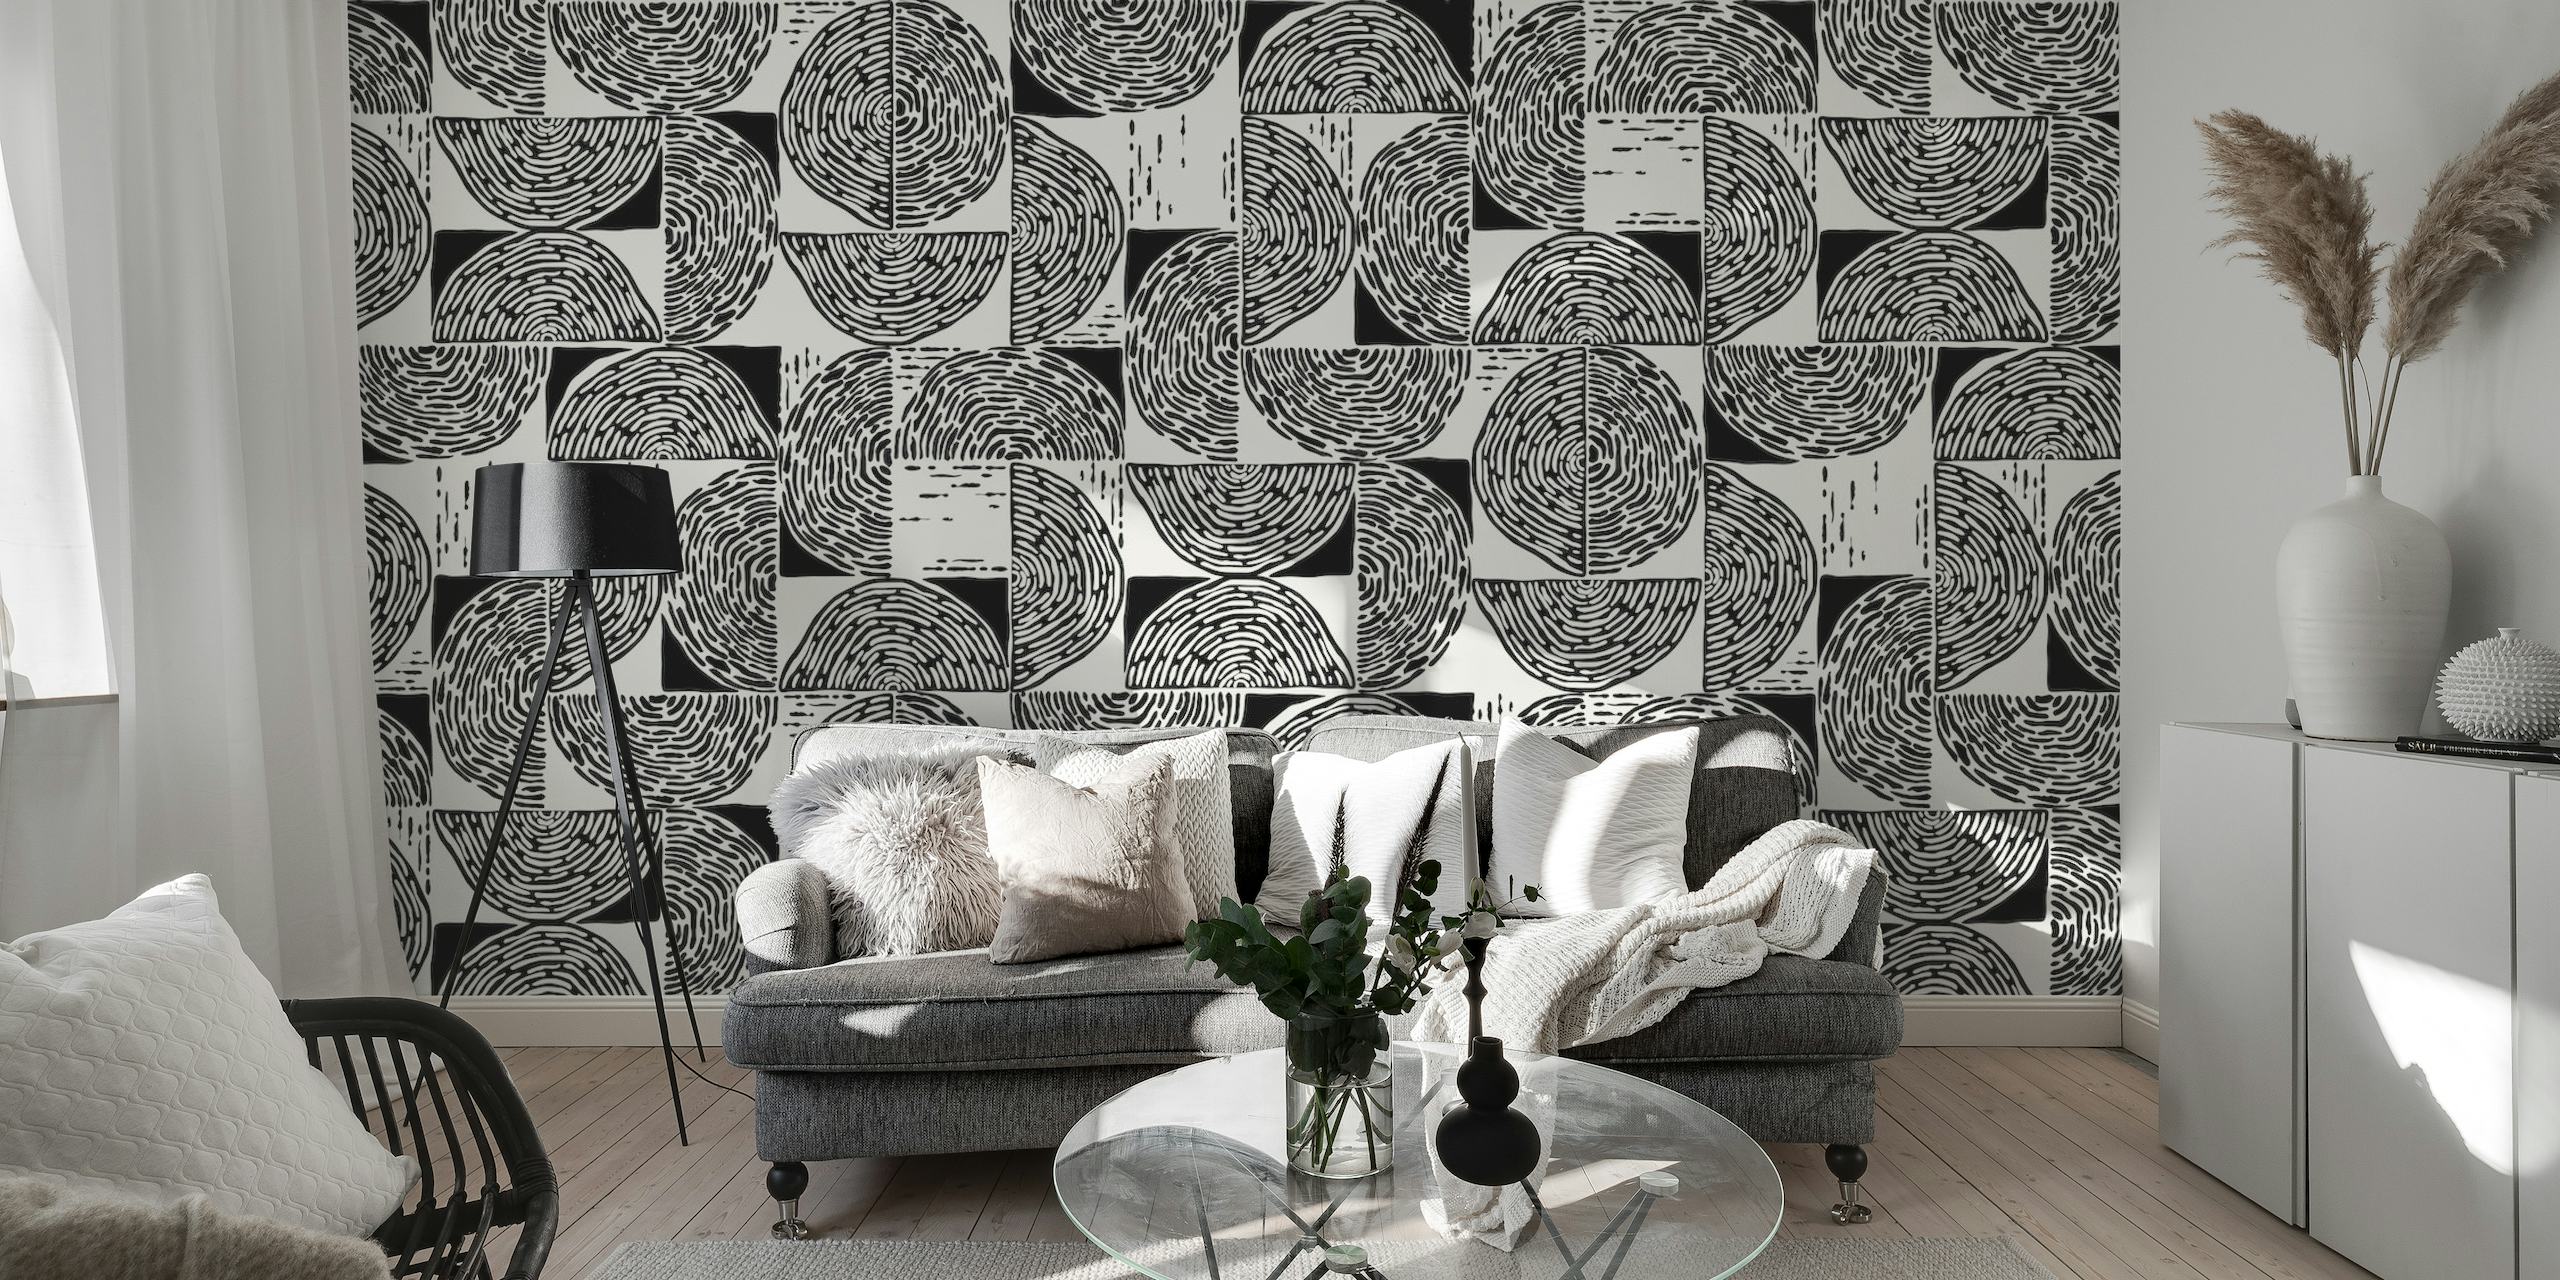 Black and white wood block print wallpaper